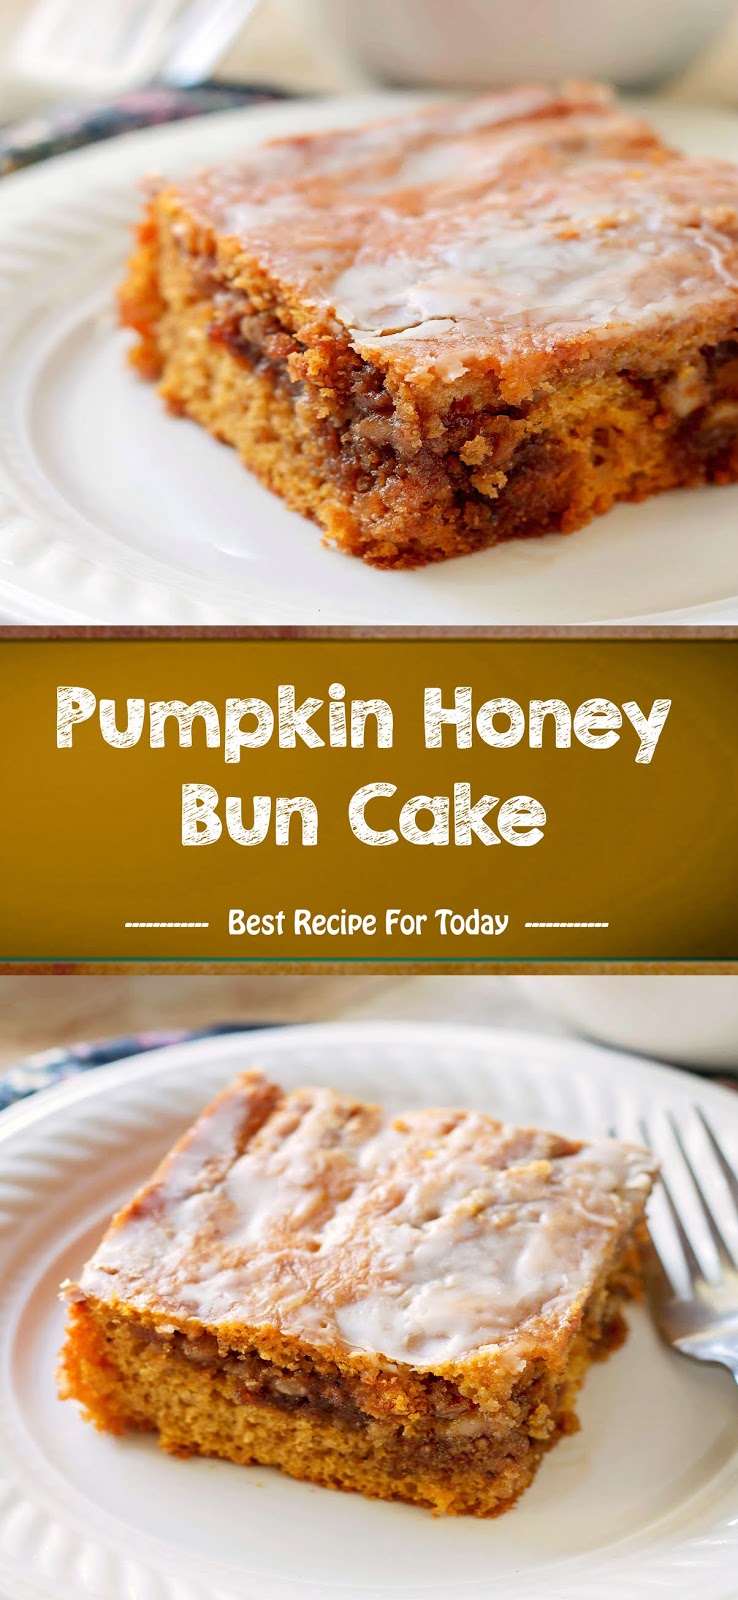 Pumpkin Honey Bun Cake - HEALTH and WELLNESS